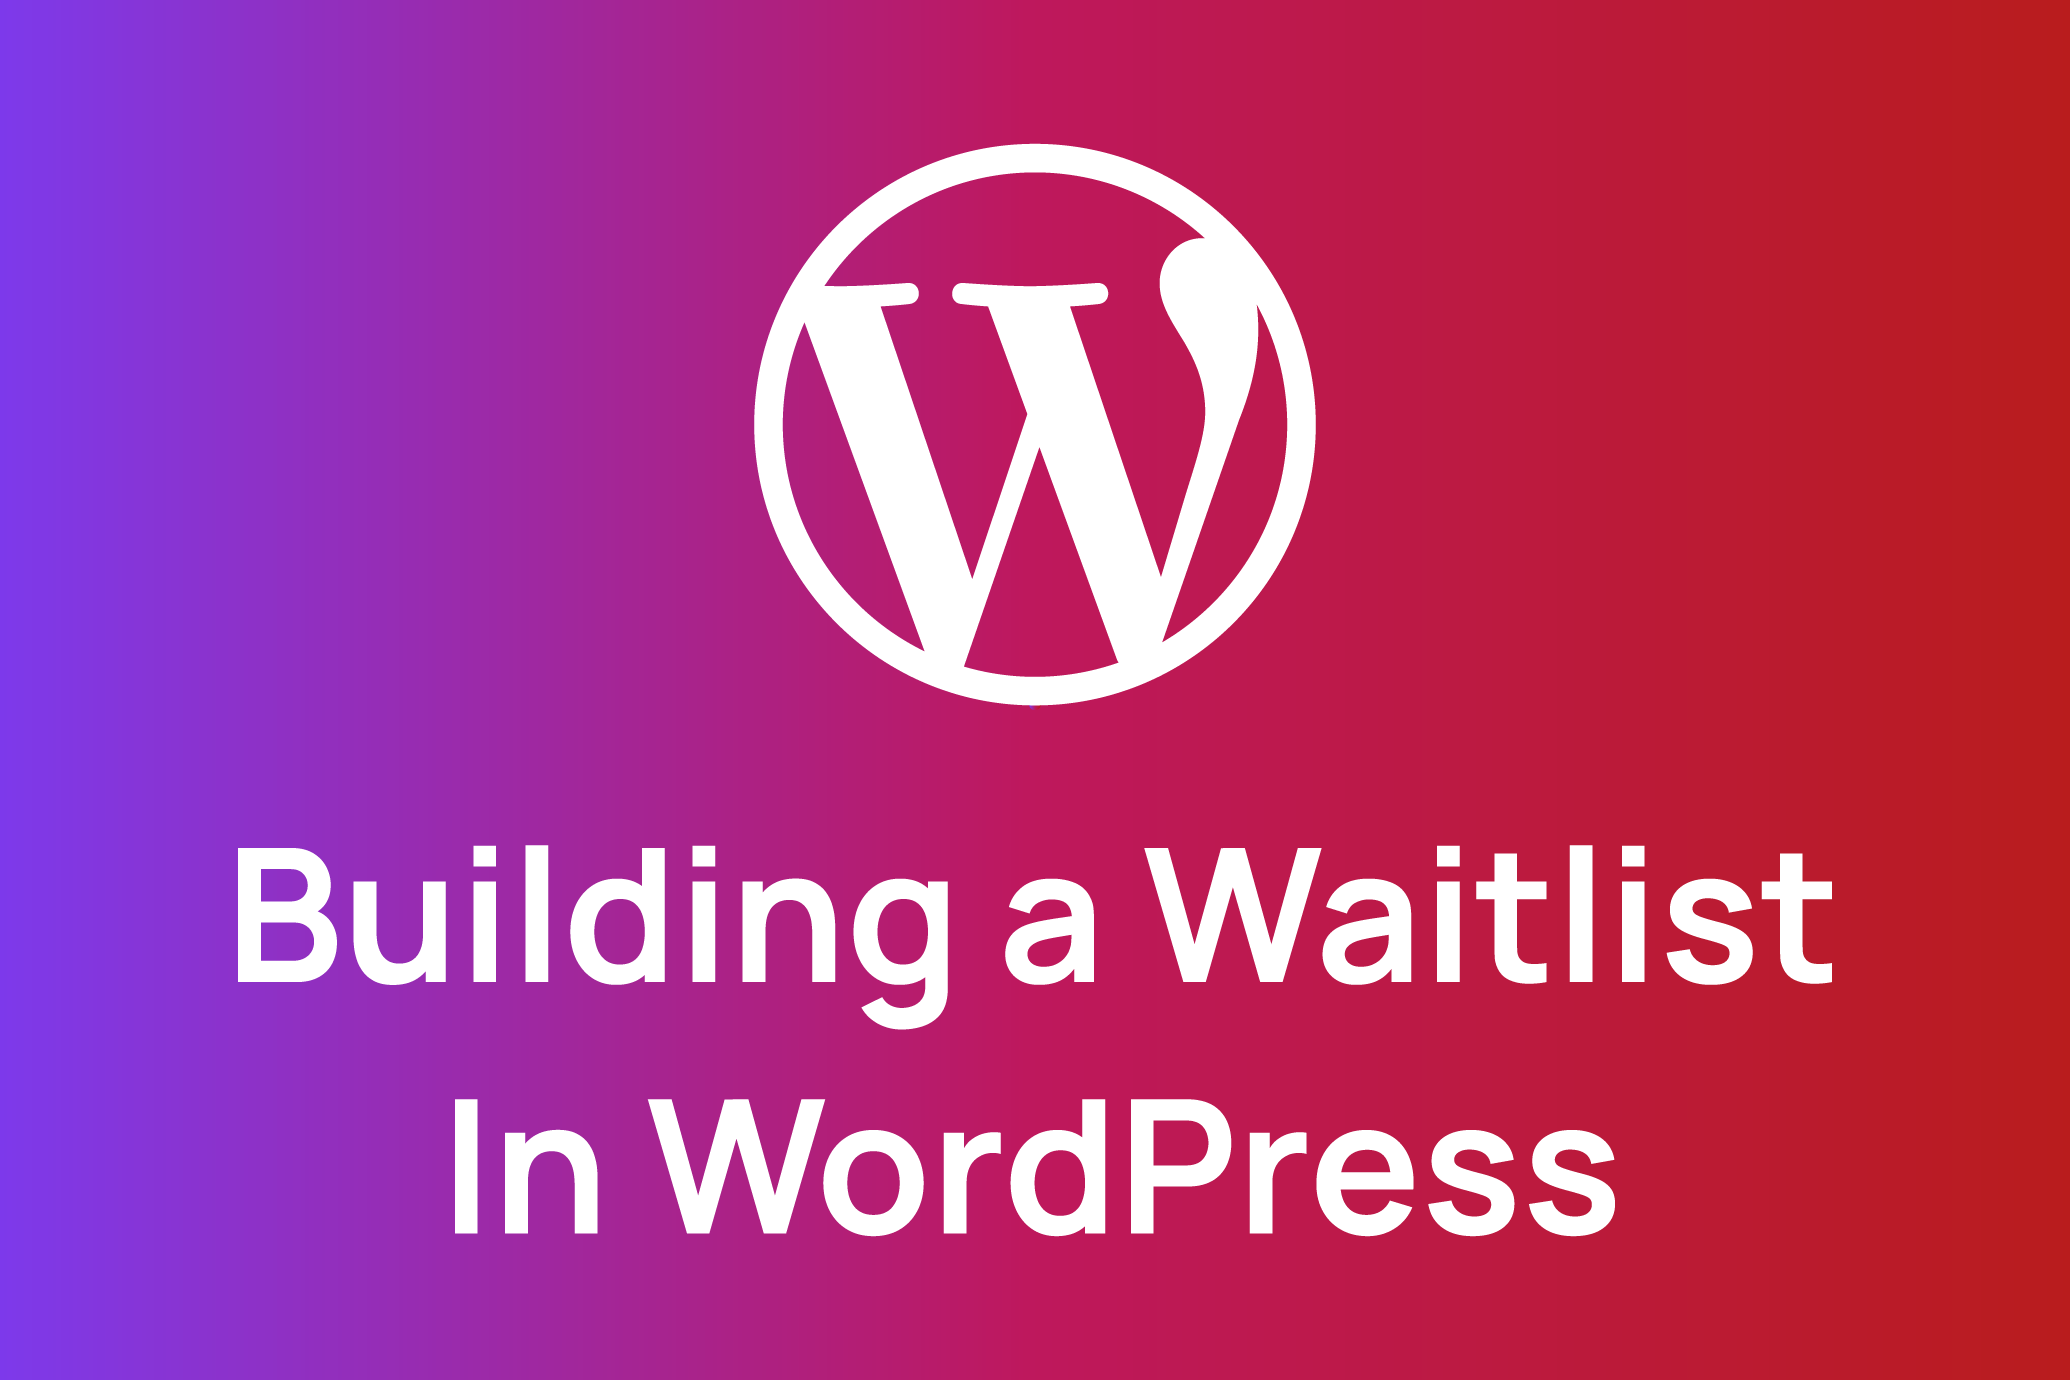 Building a Waitlist in WordPress